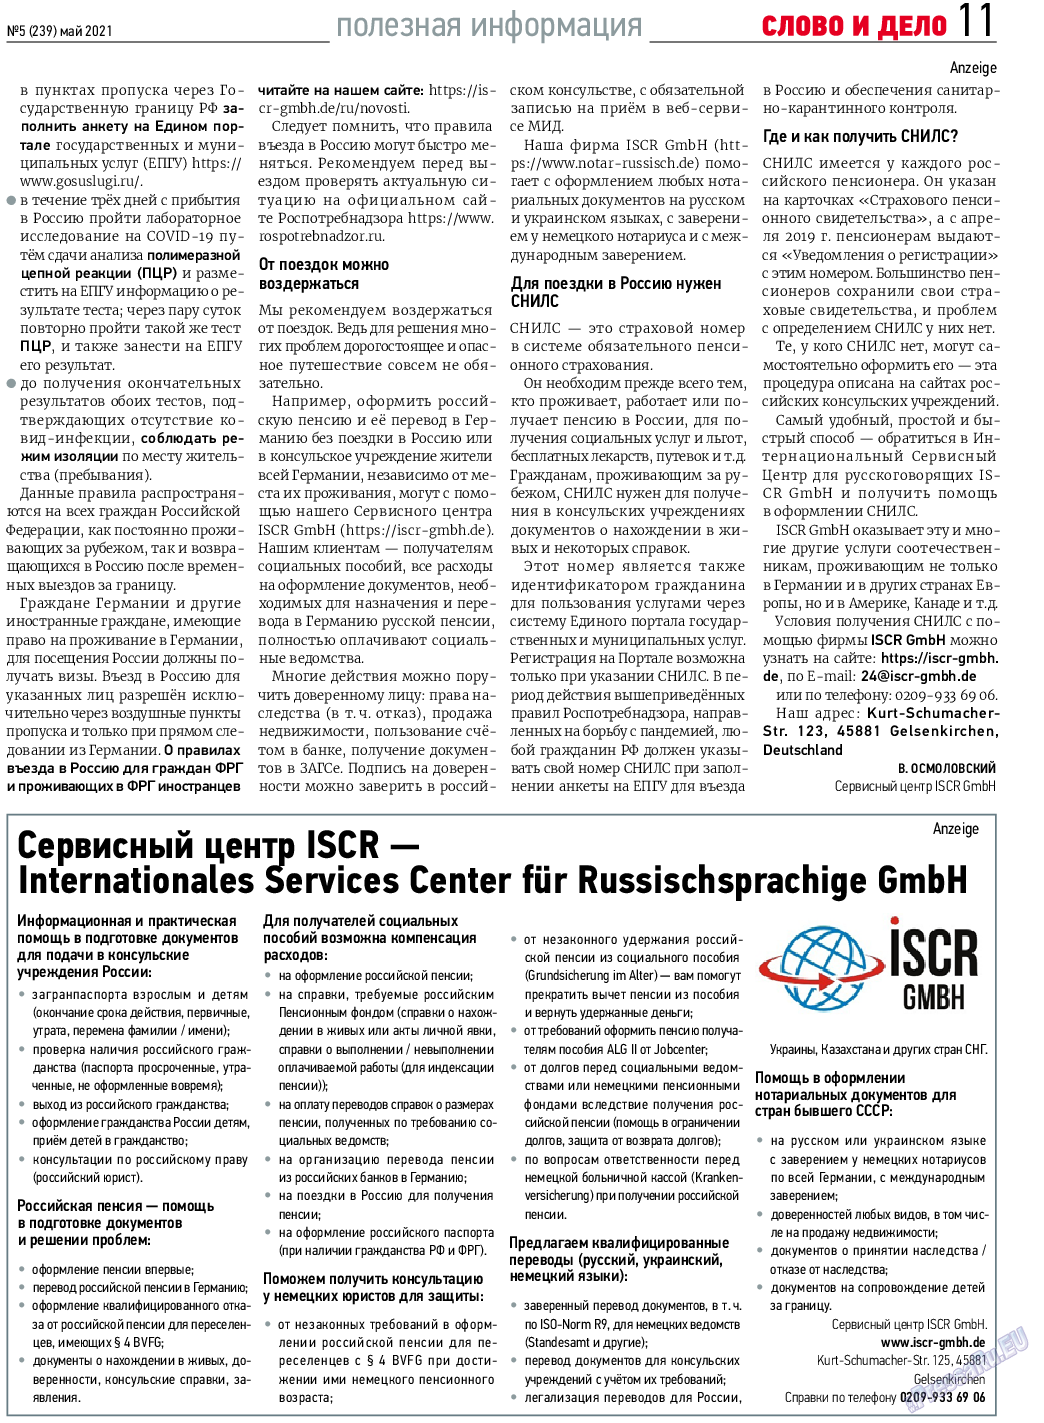 Телеграф NRW, газета. 2021 №5 стр.11